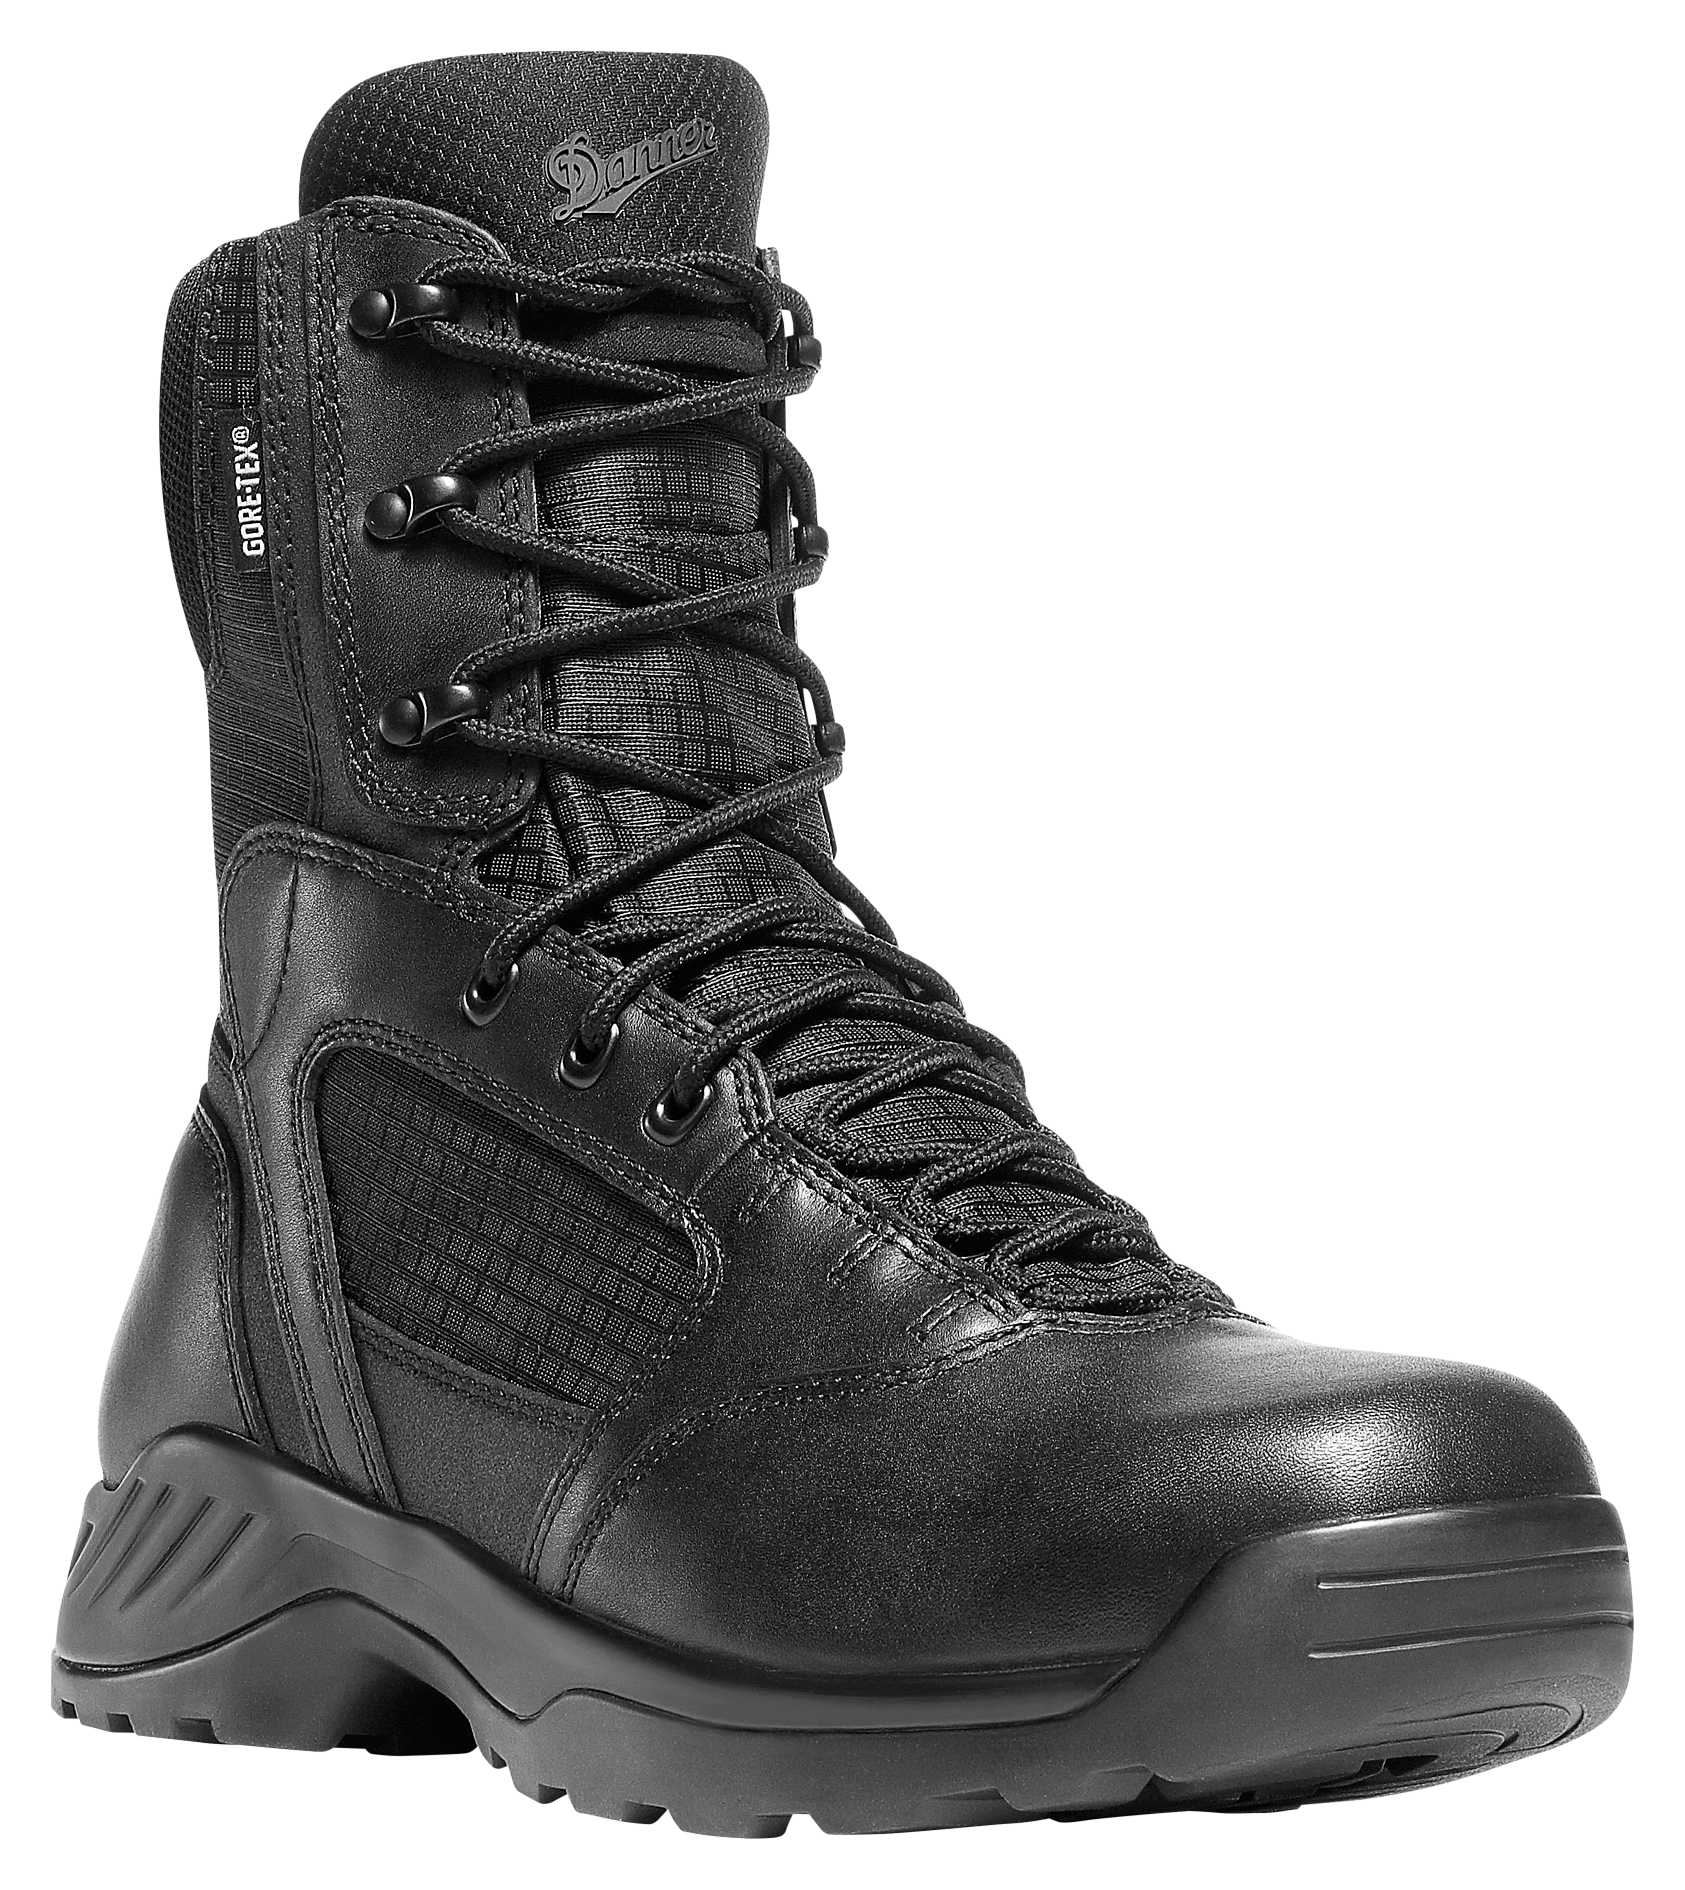 Danner Kinetic GTX Side-Zip Waterproof Tactical Duty Boots for Men - Black - 8.5W